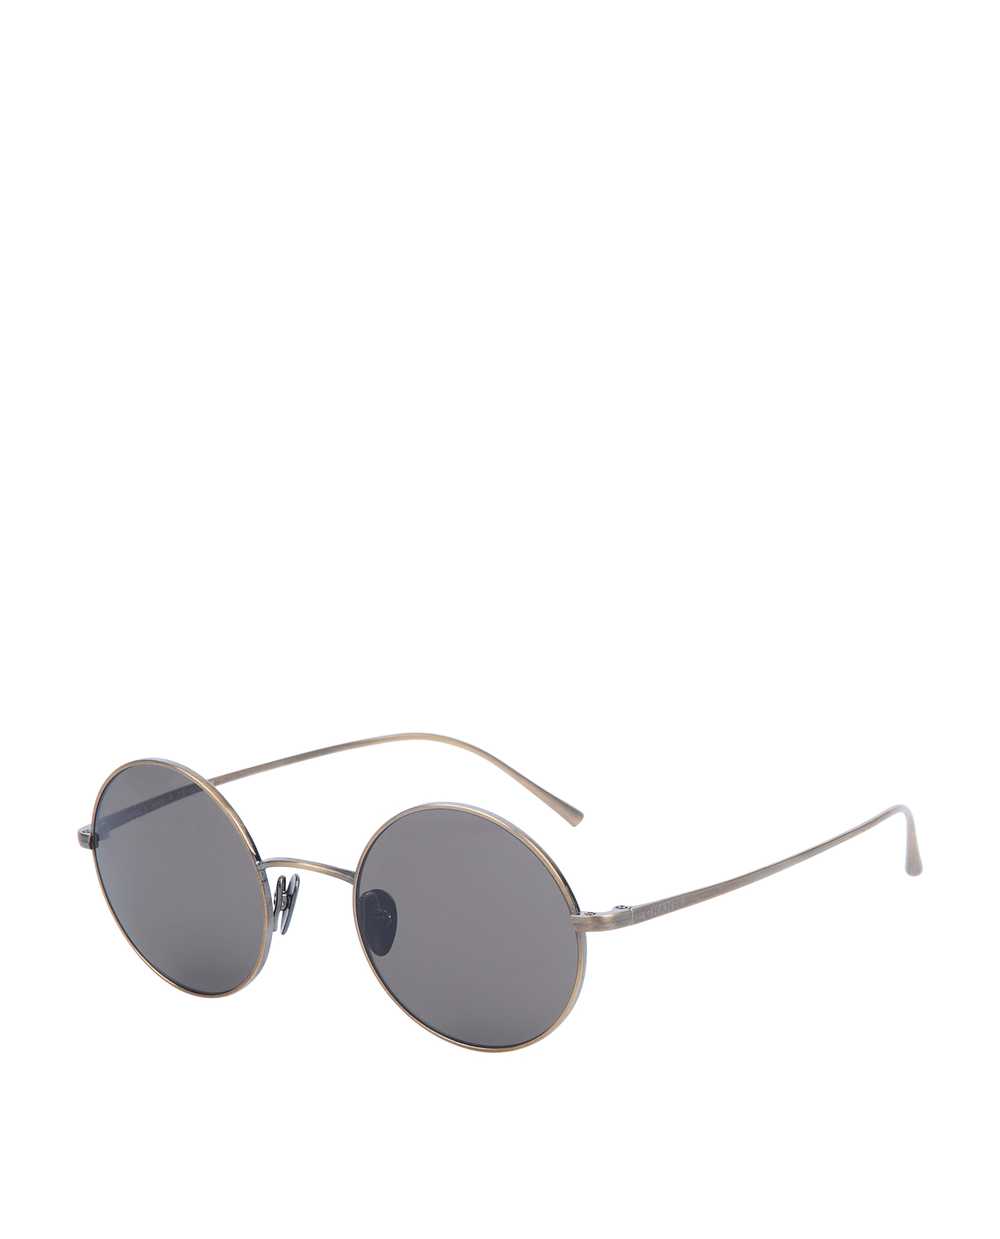 Sunglasses Chanel Round Sunglasses - image 3